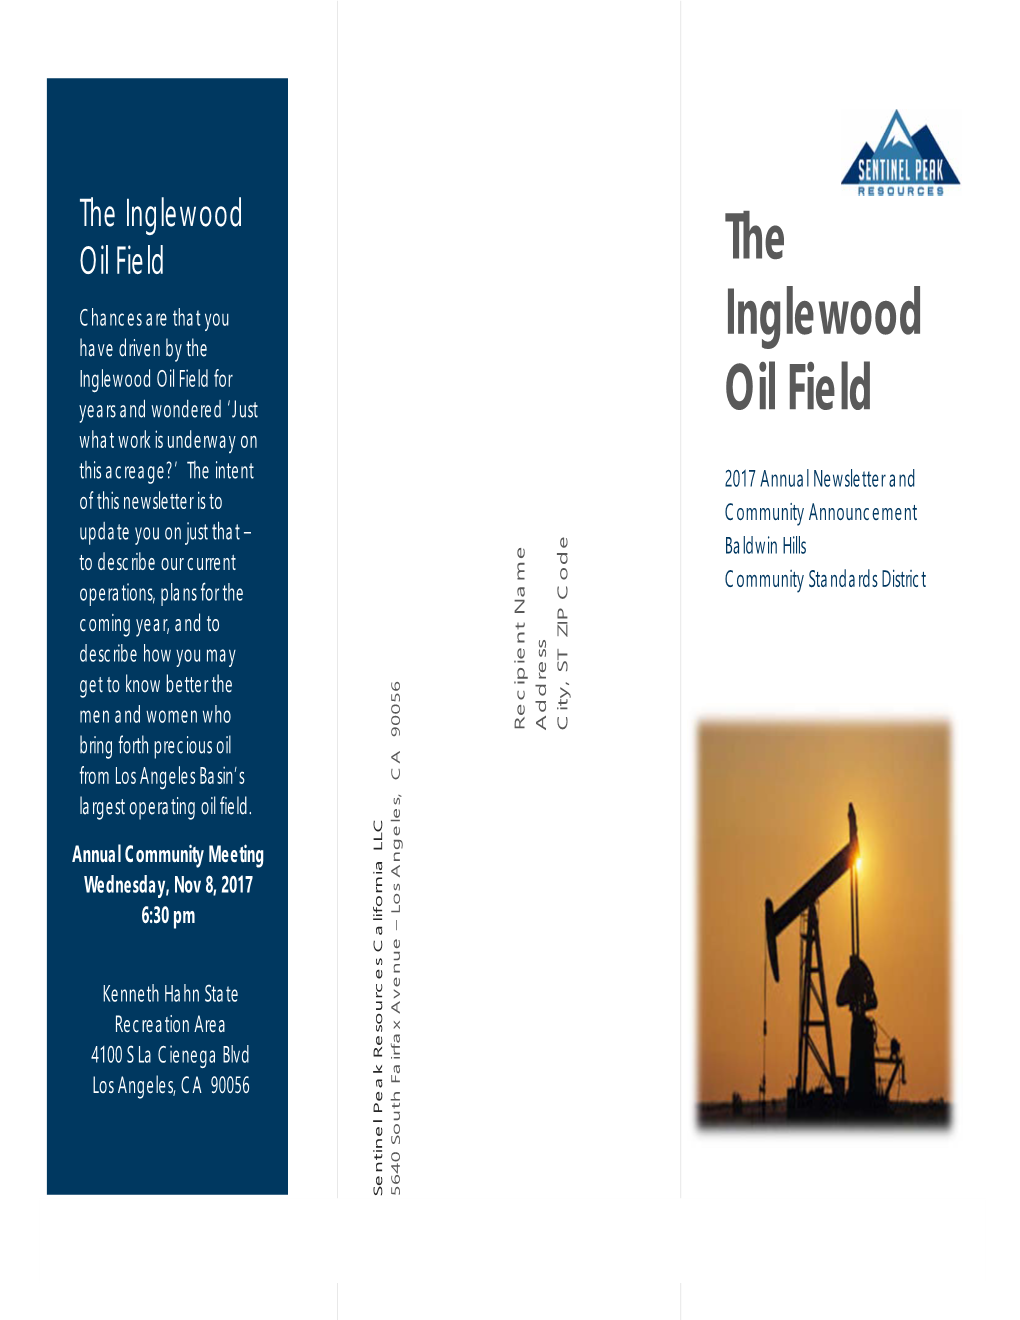 The Inglewood Oil Field